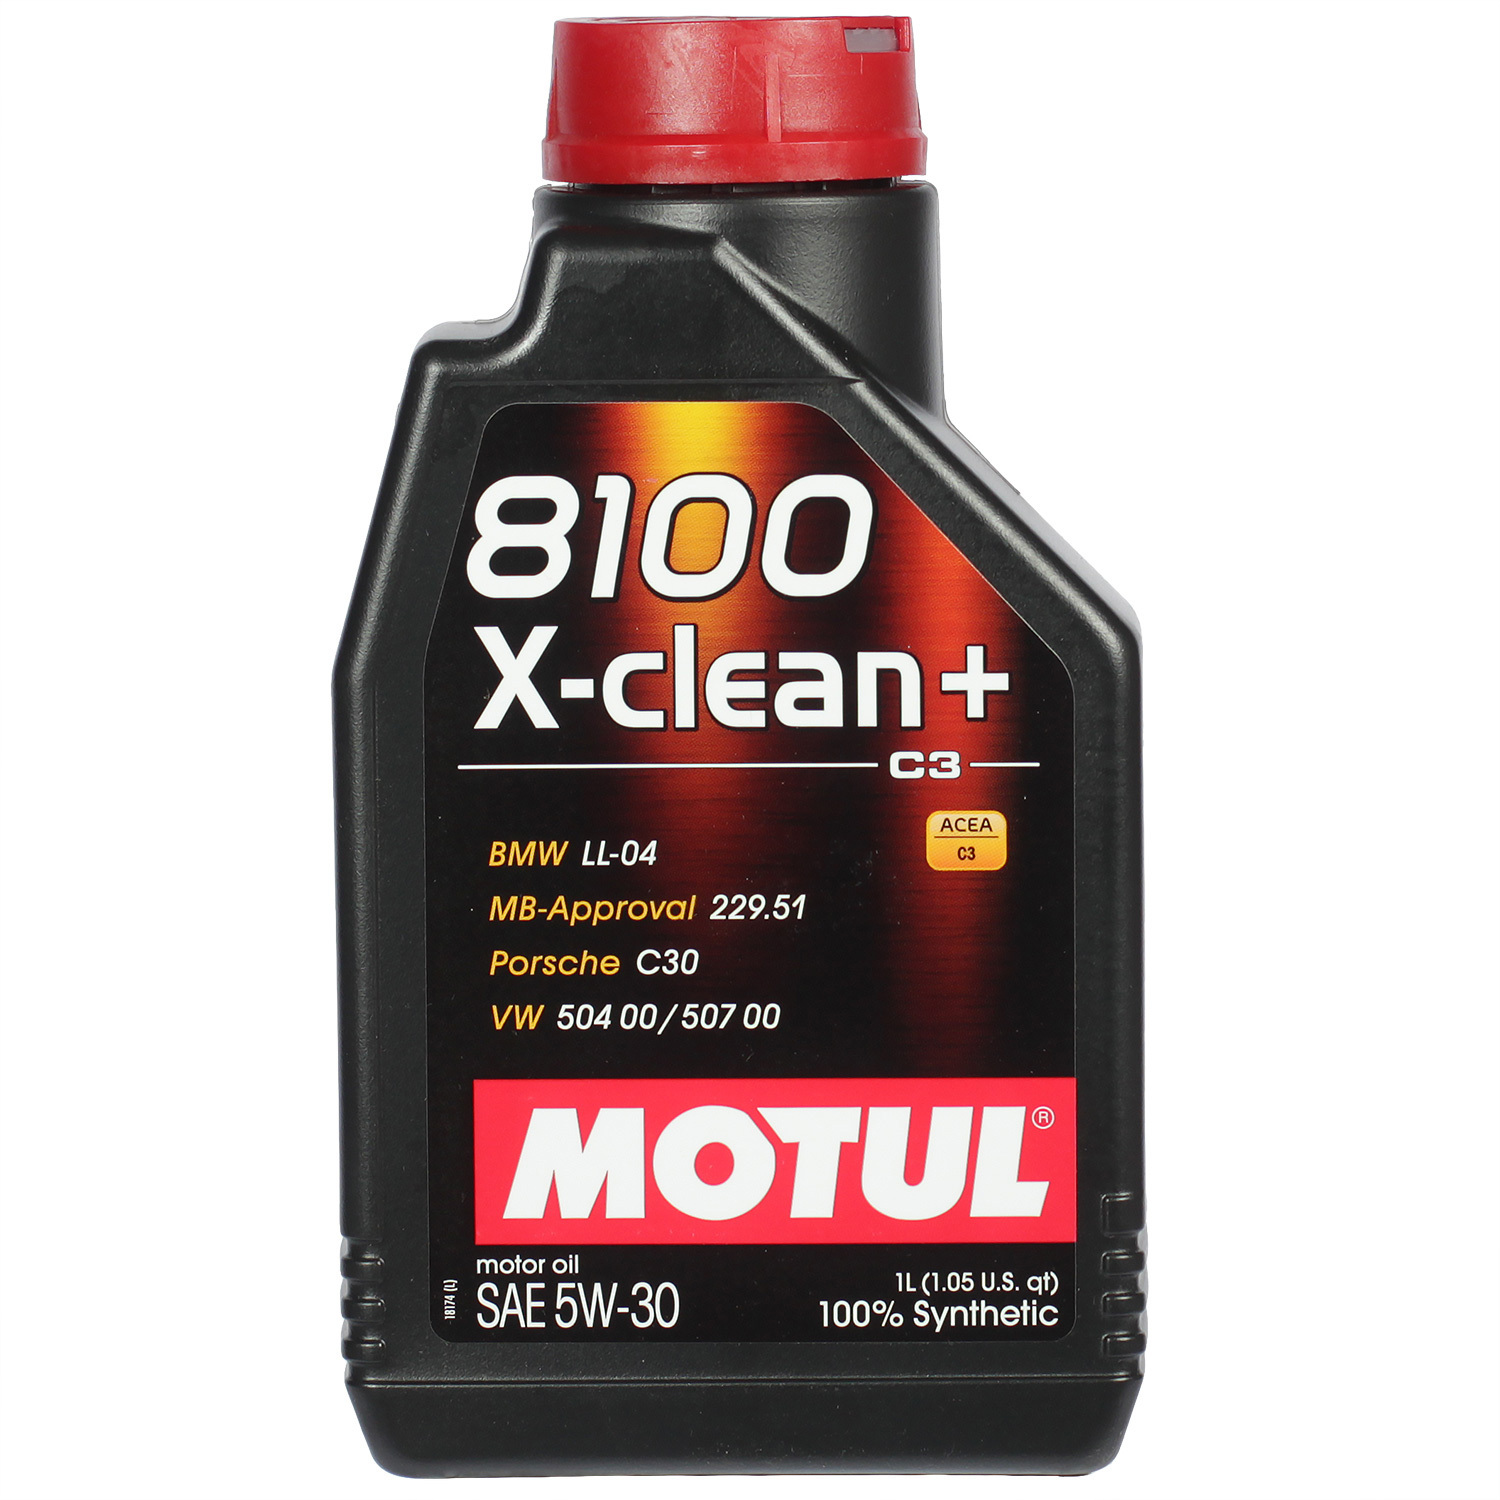 Motul Моторное масло Motul 8100 X-clean+ 5W-30, 1 л масло моторное motul 8100 eco clean 0w 20 1 л 108813